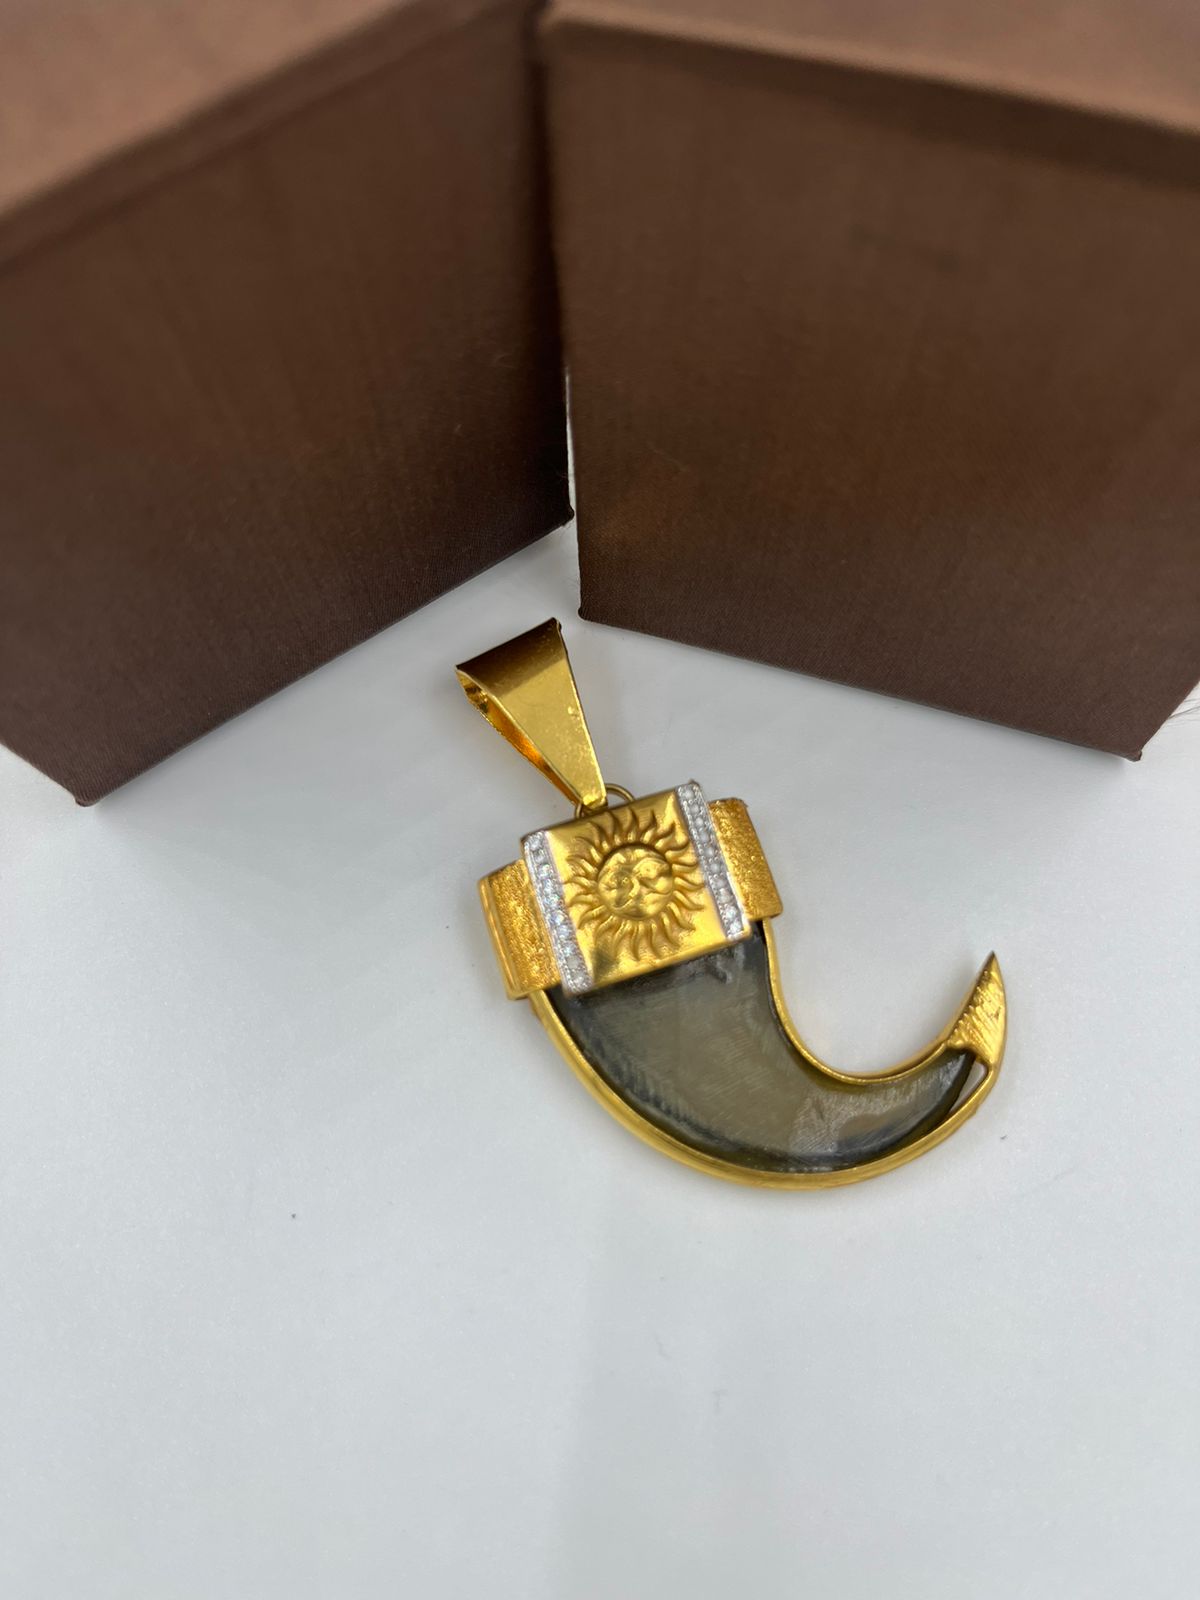 1 Gram Gold Plated Artificial Lion Nail Delicate Design Pendant for Men -  Style B611 at Rs 2860.00 | गोल्ड प्लेटेड पेंडेंट - Soni Fashion, Rajkot |  ID: 2851790768091